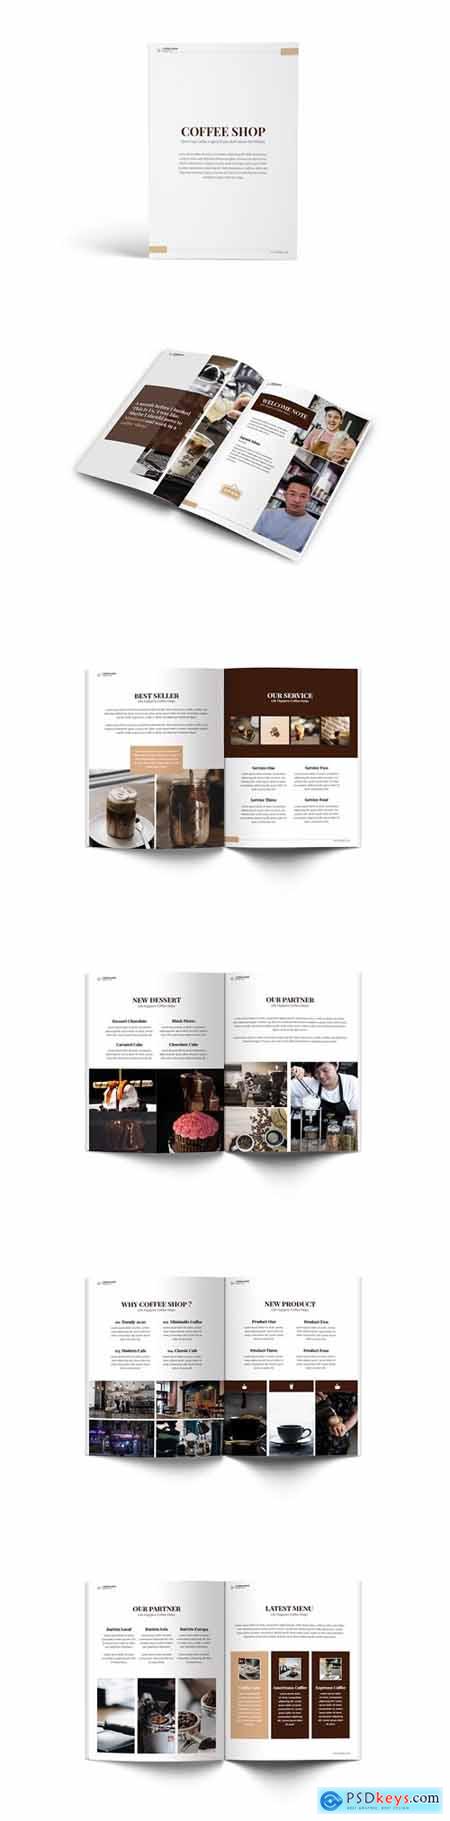 Coffee Shop A4 Brochure Template